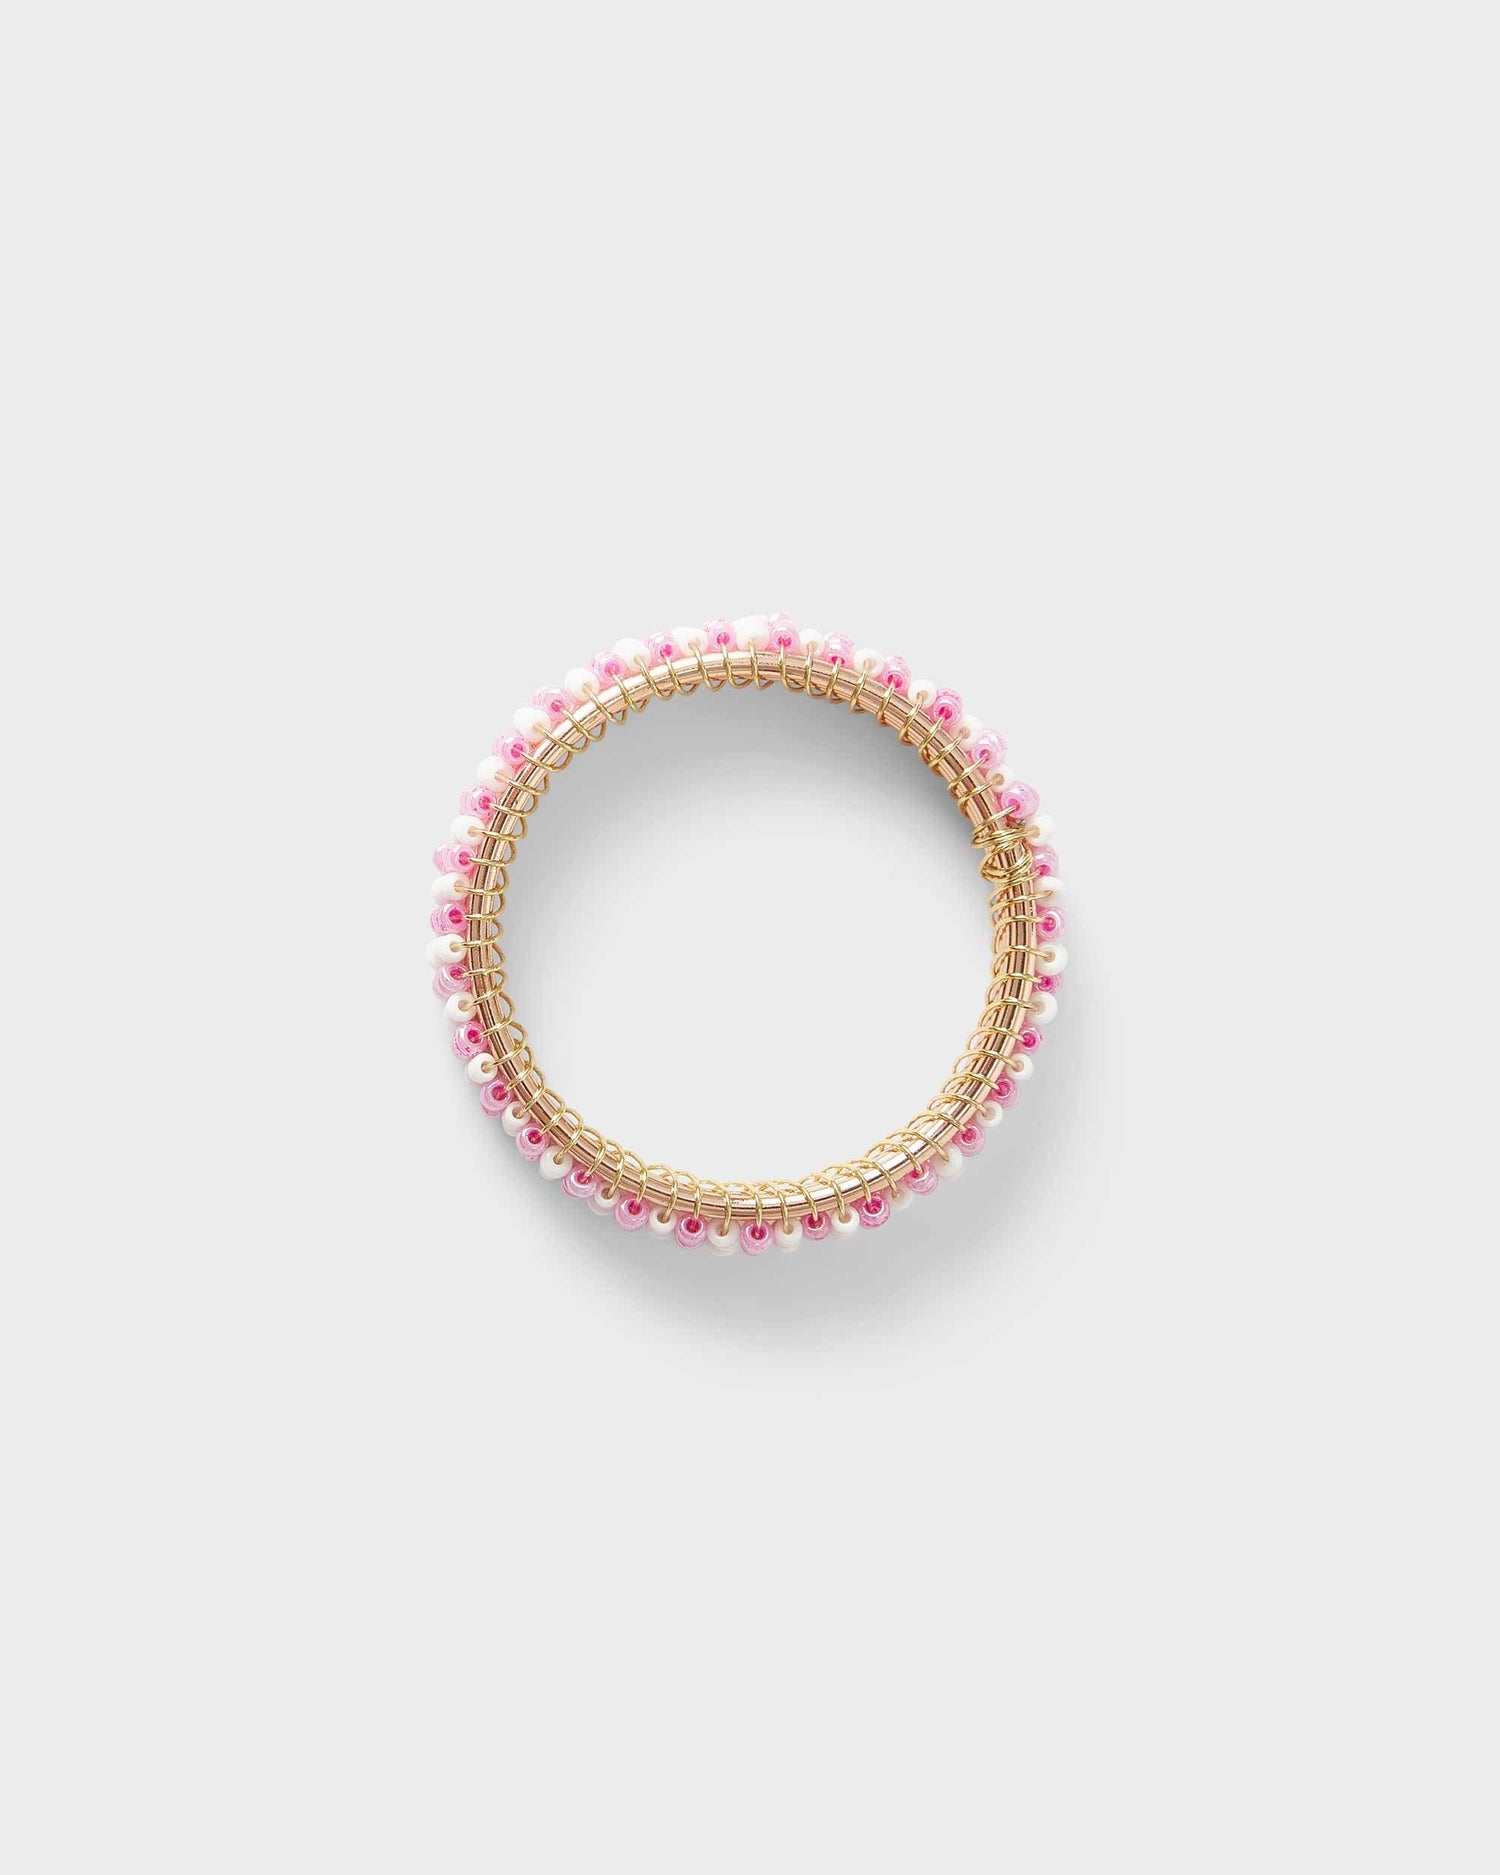 Napkin Ring - Pink and White beads - Von Home